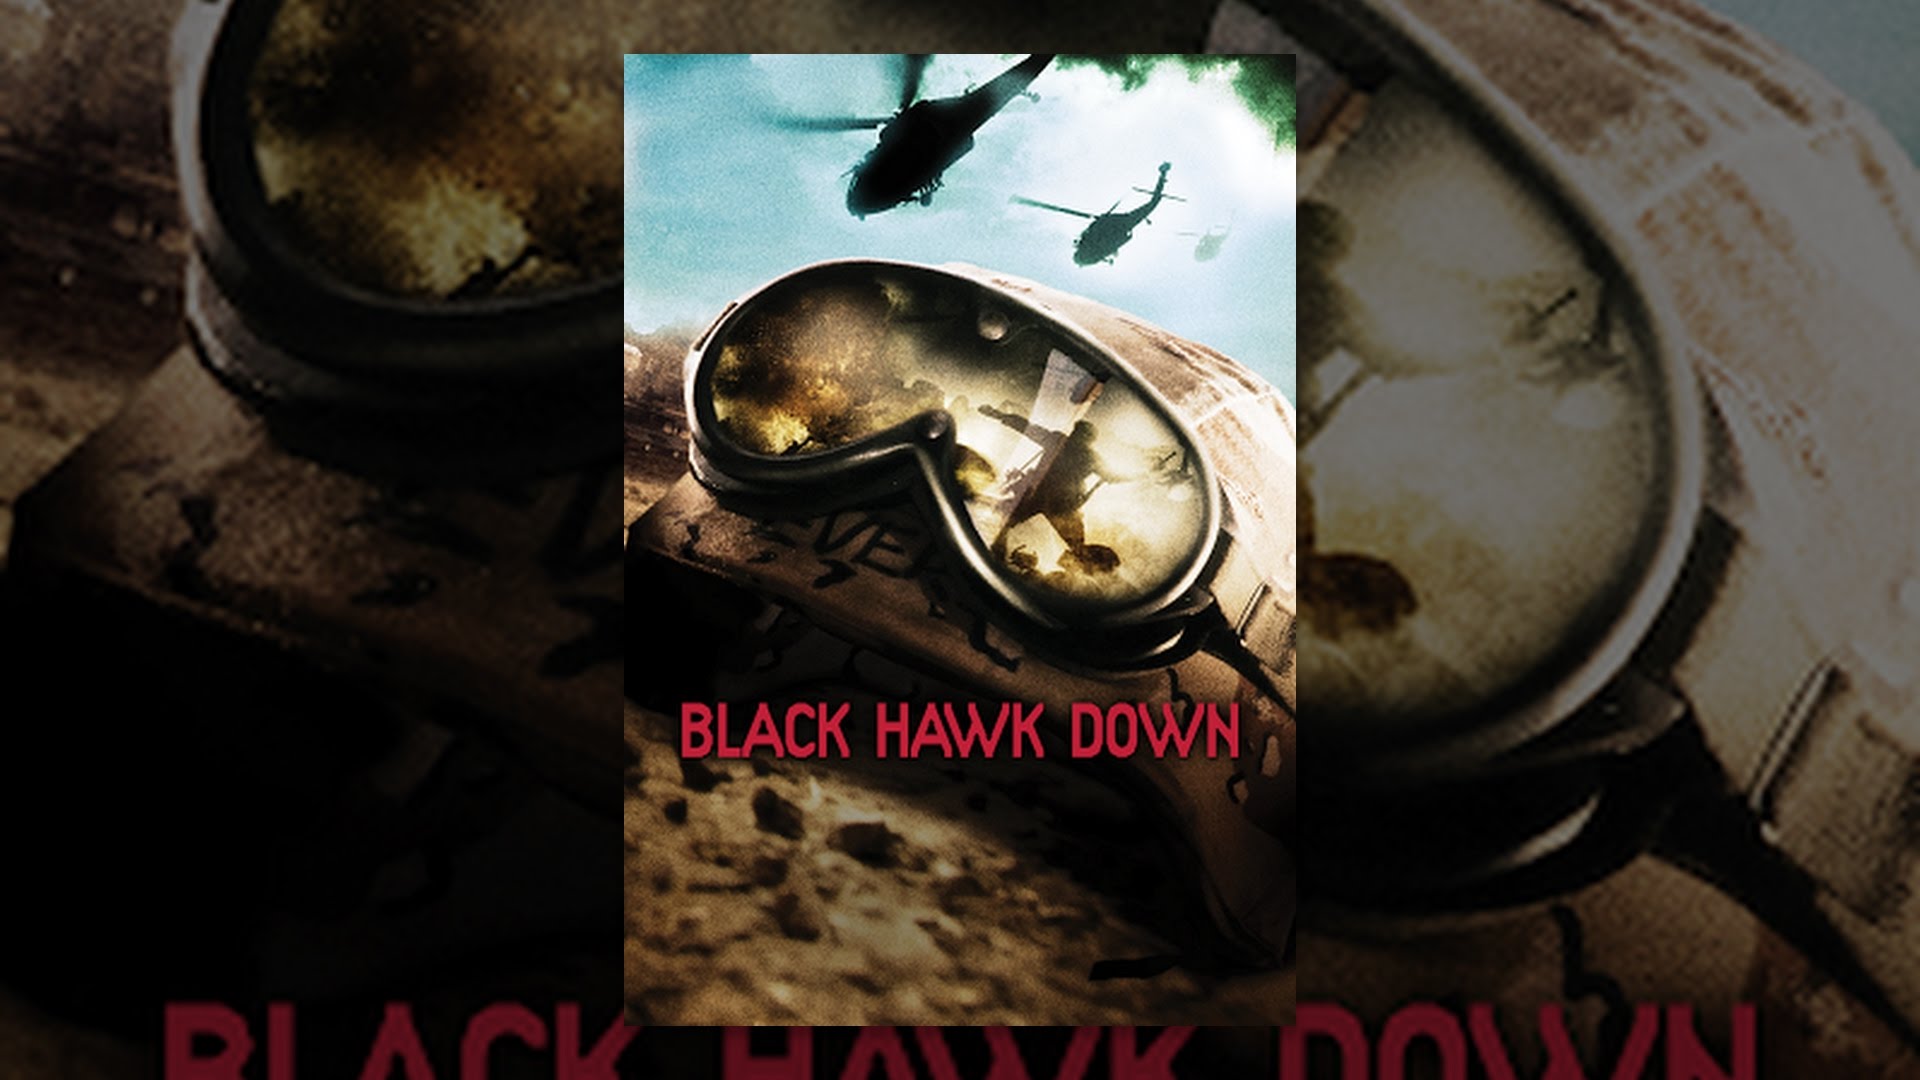 Black Hawk down - YouTube